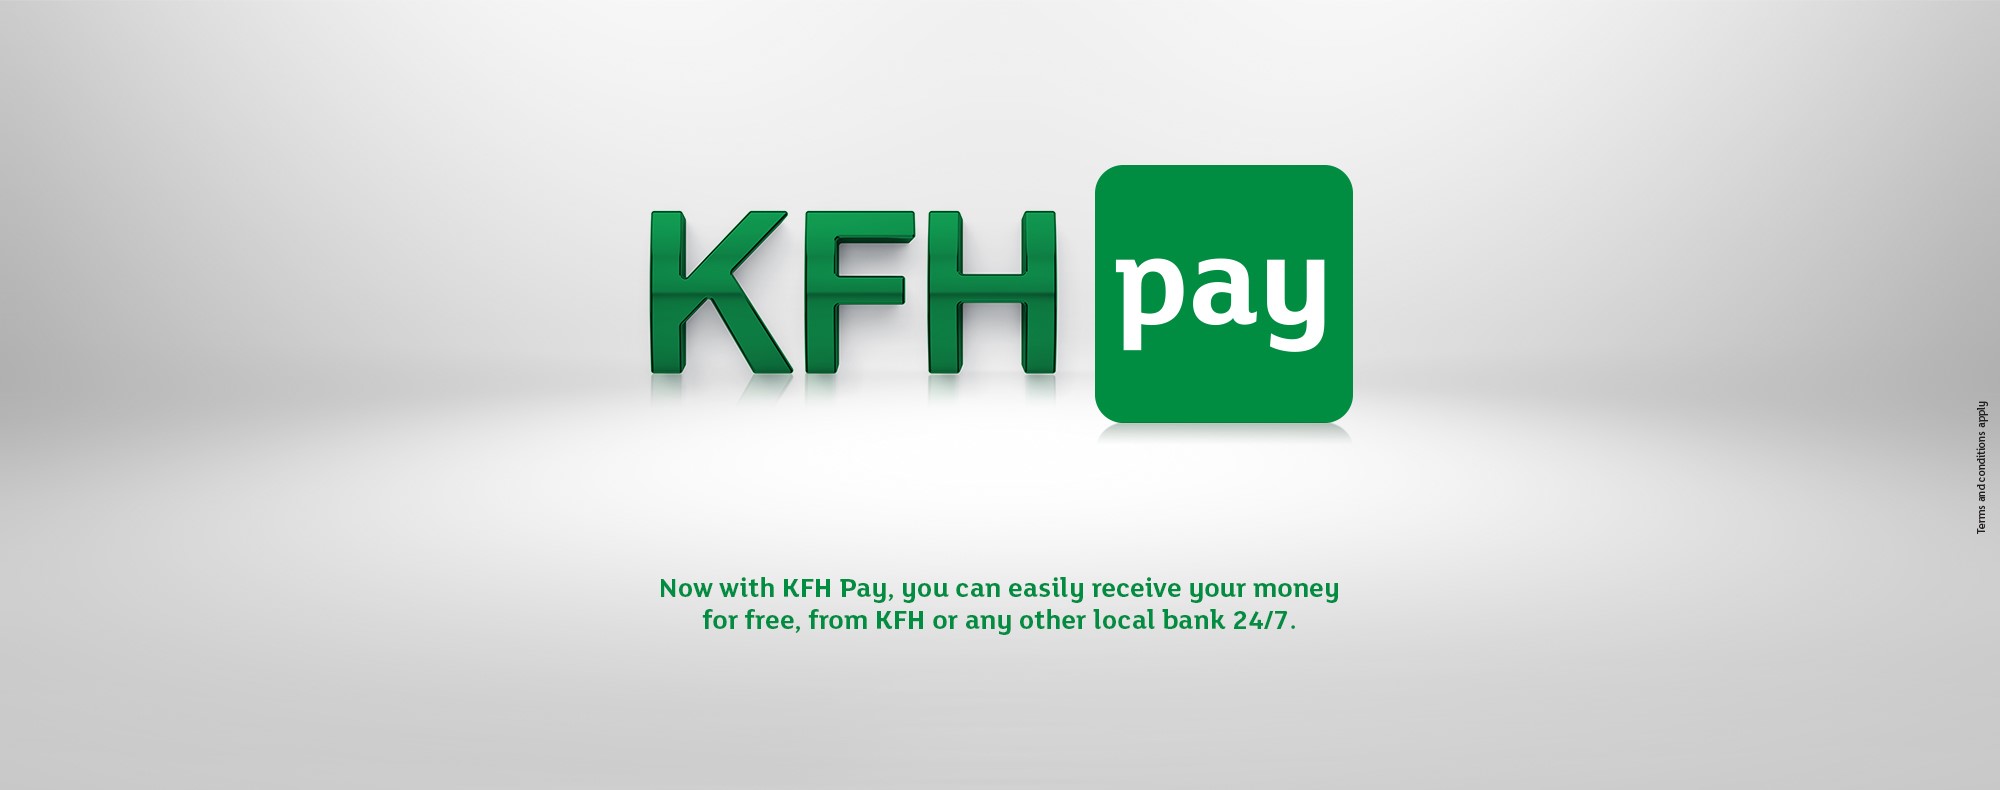 KFH Pay Service